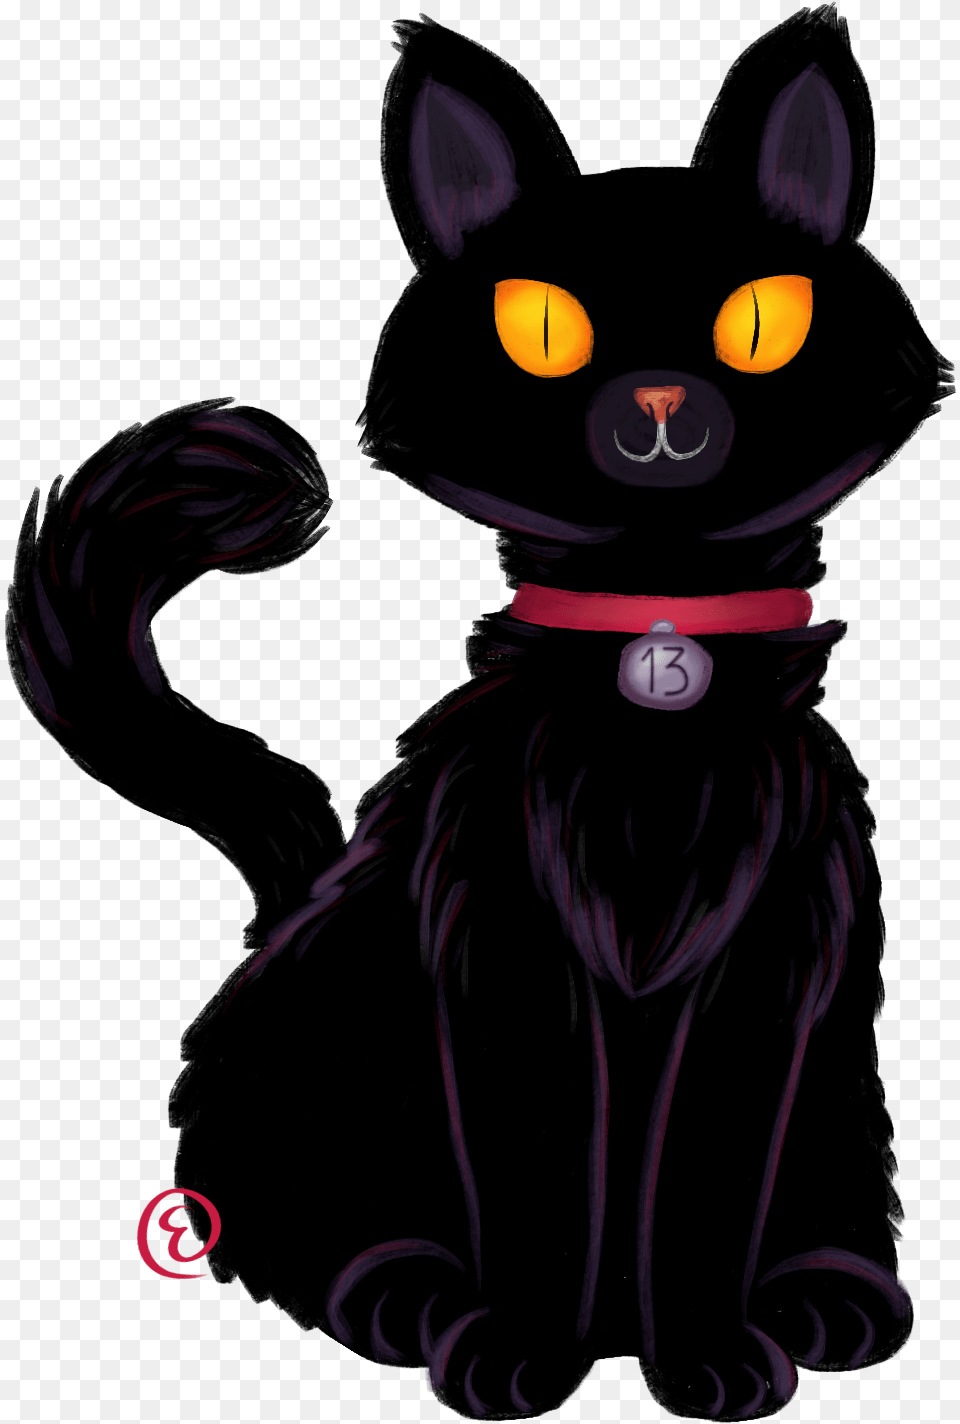 Black Cat Whiskers Dog Collar Chernij Kot I Chernaya Pyatnica, Animal, Mammal, Pet, Person Png Image